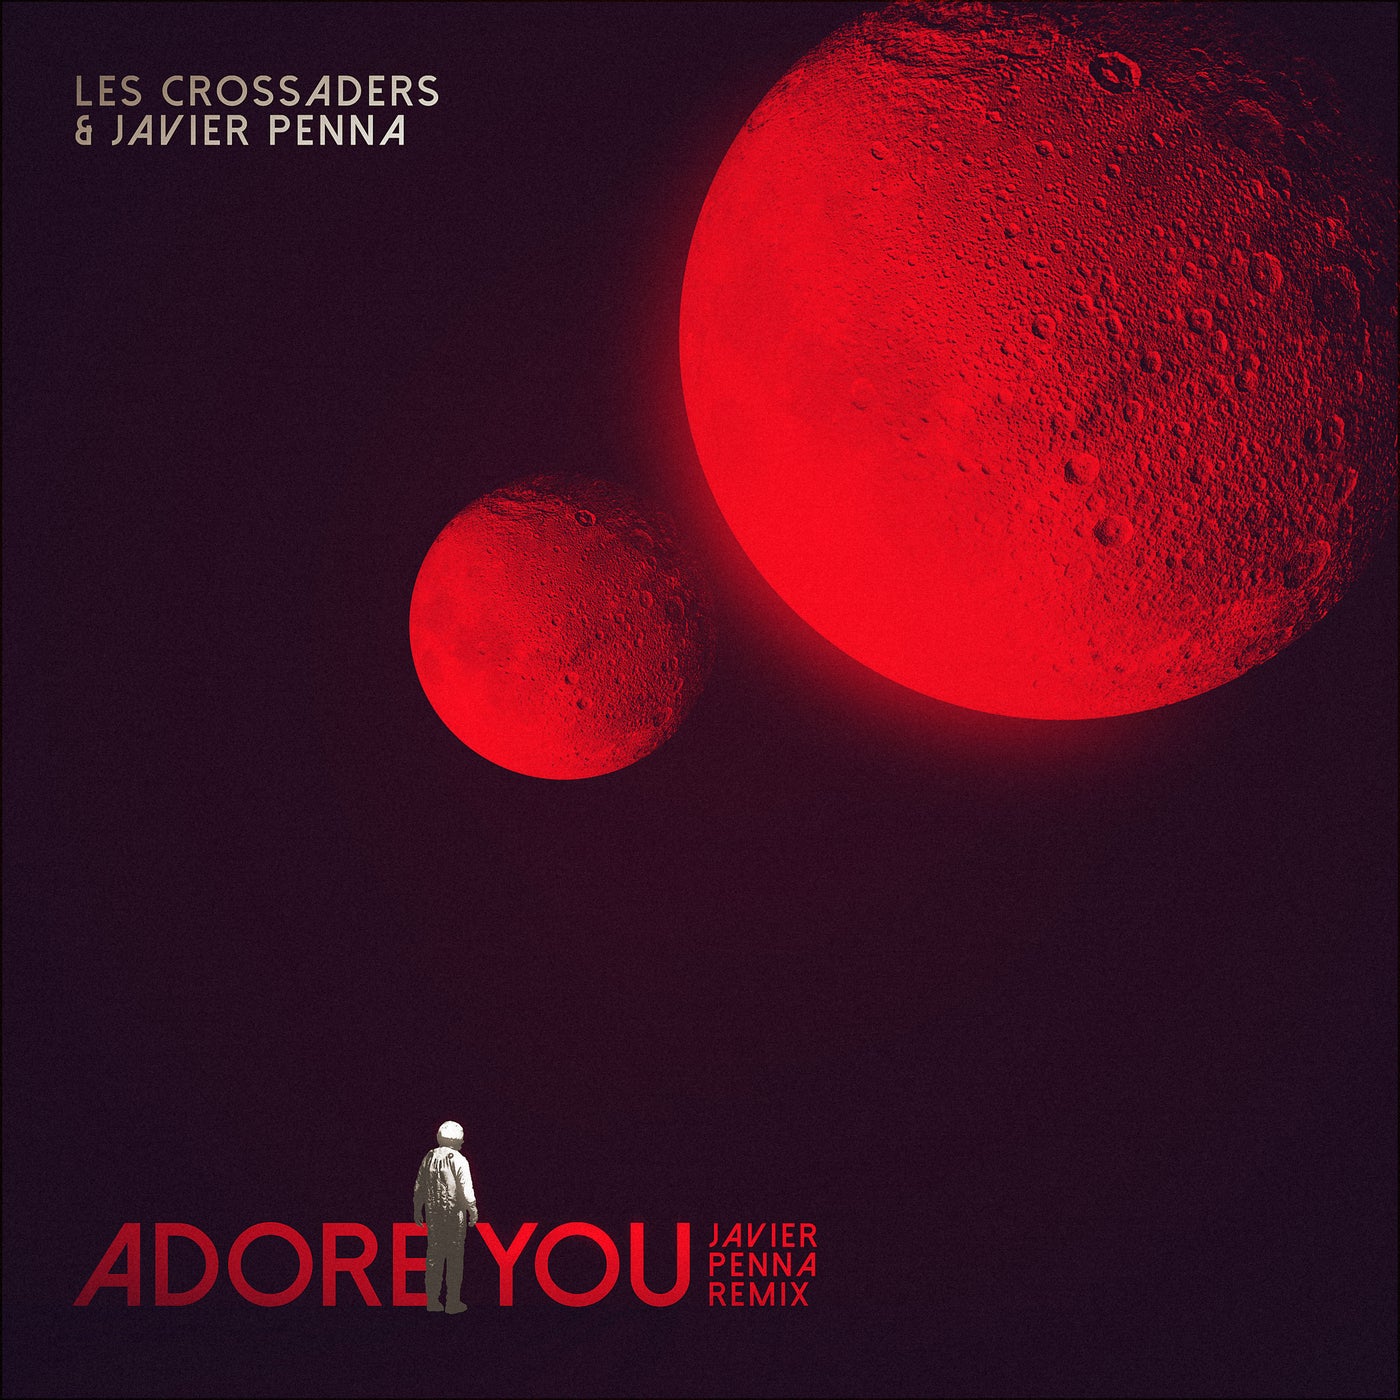 Adore You (Javier Penna Remix)